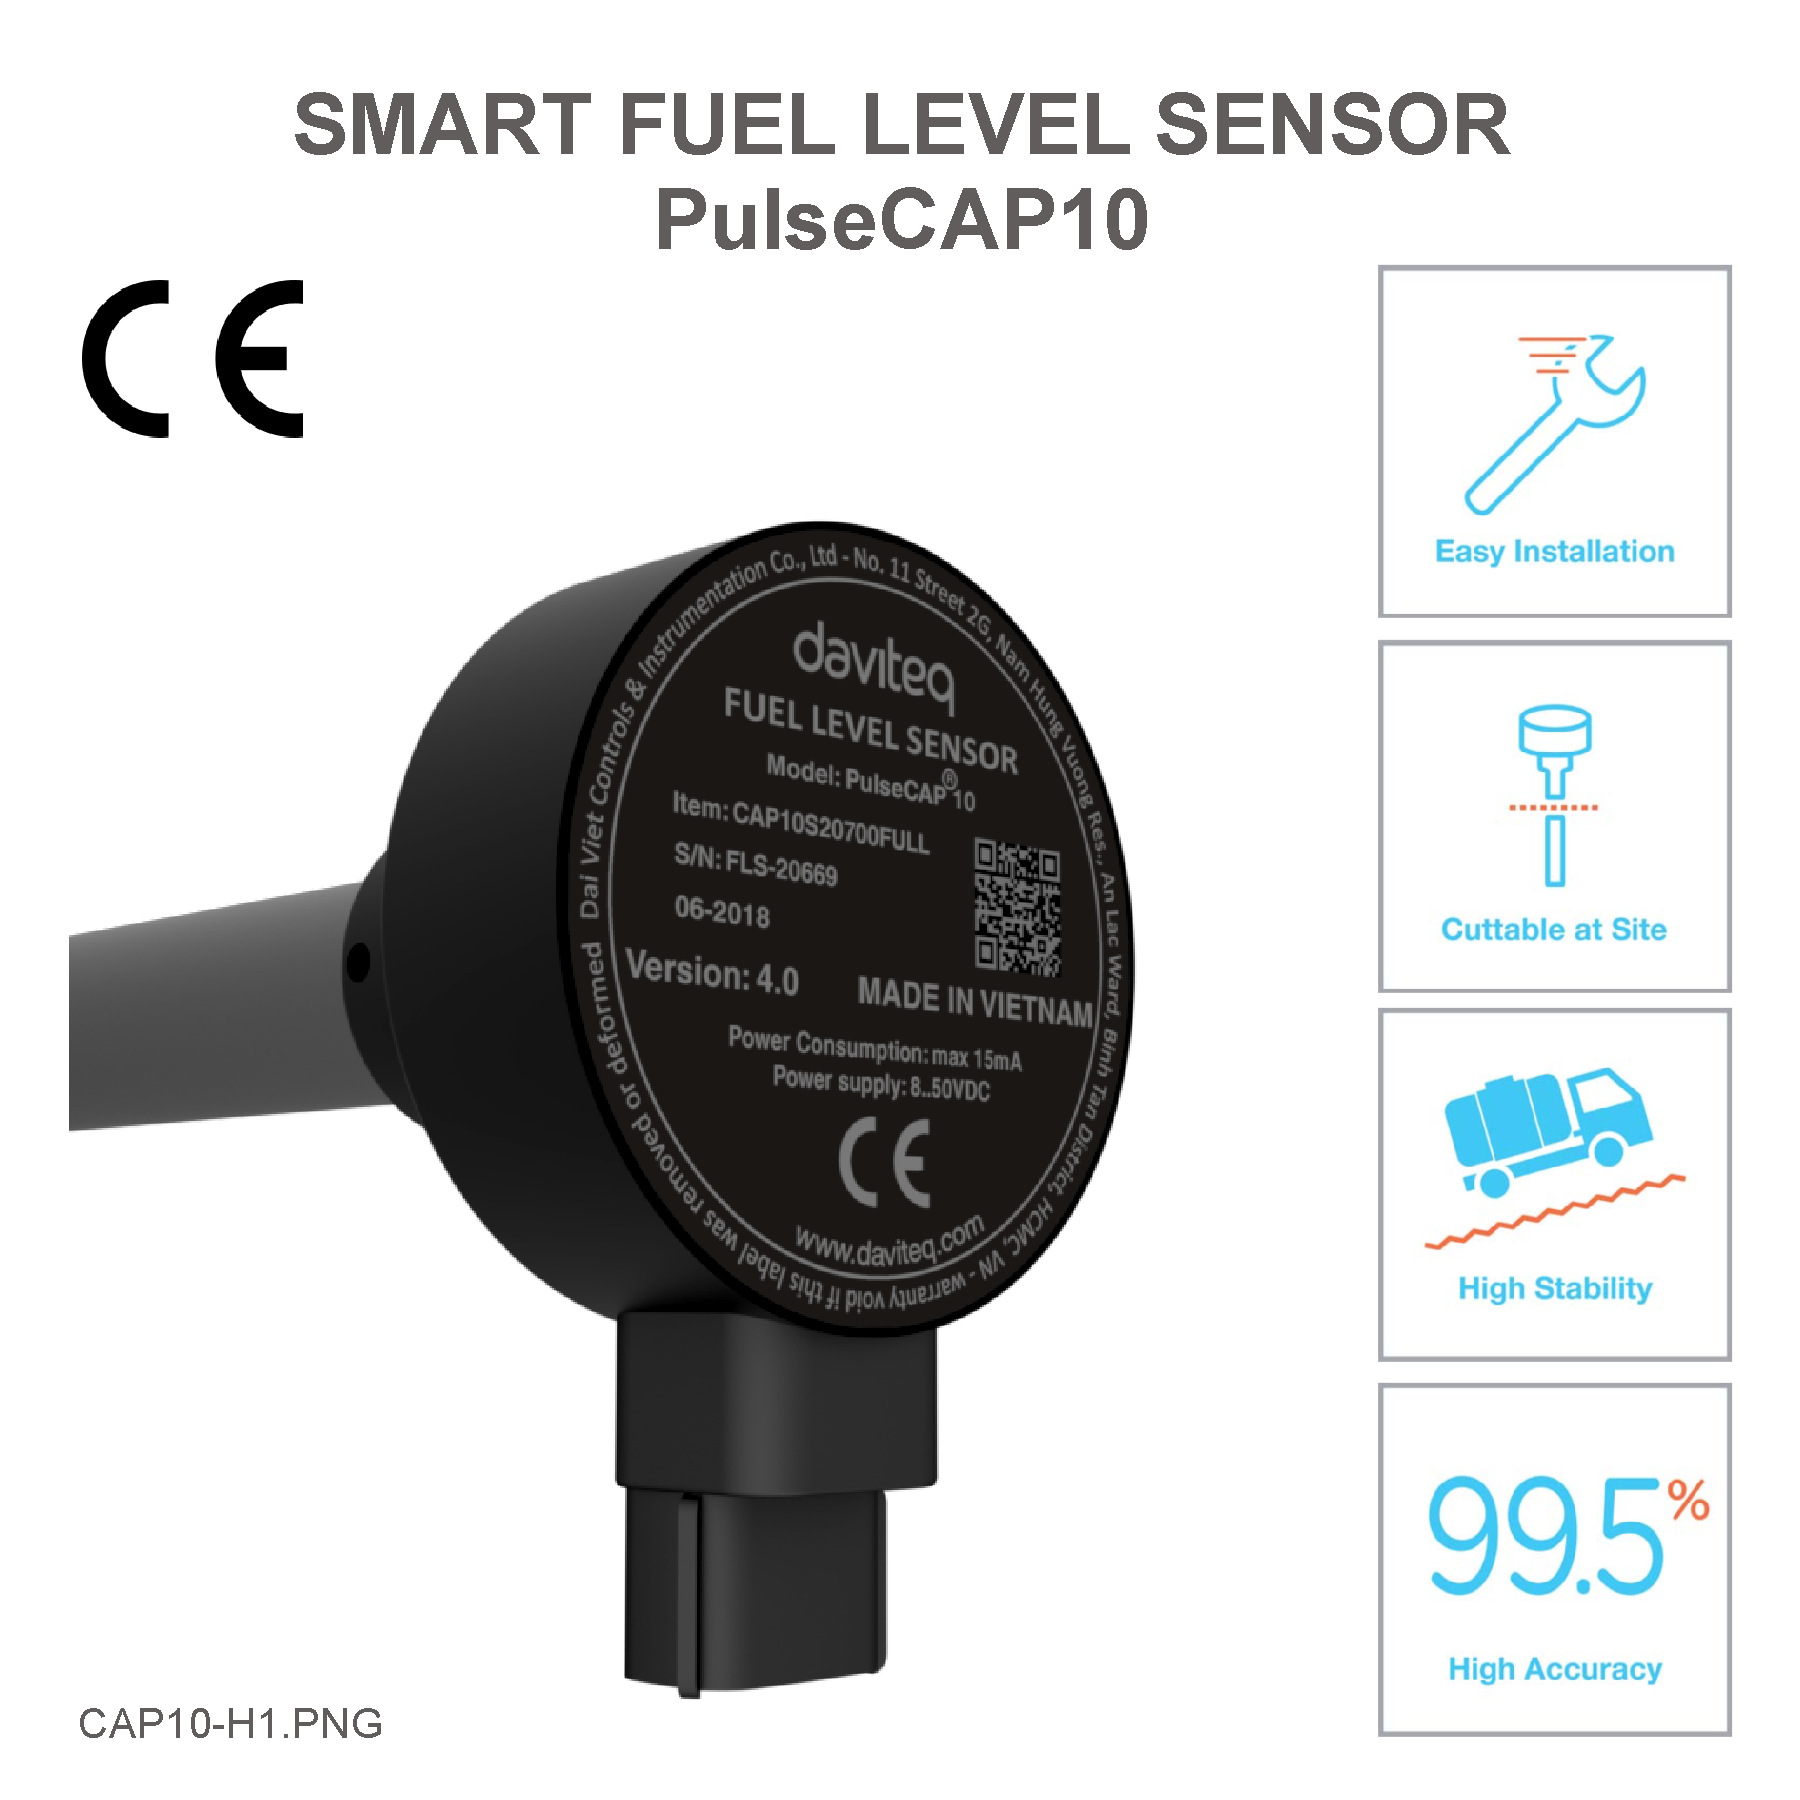 Fuel level sensors for Vehicles